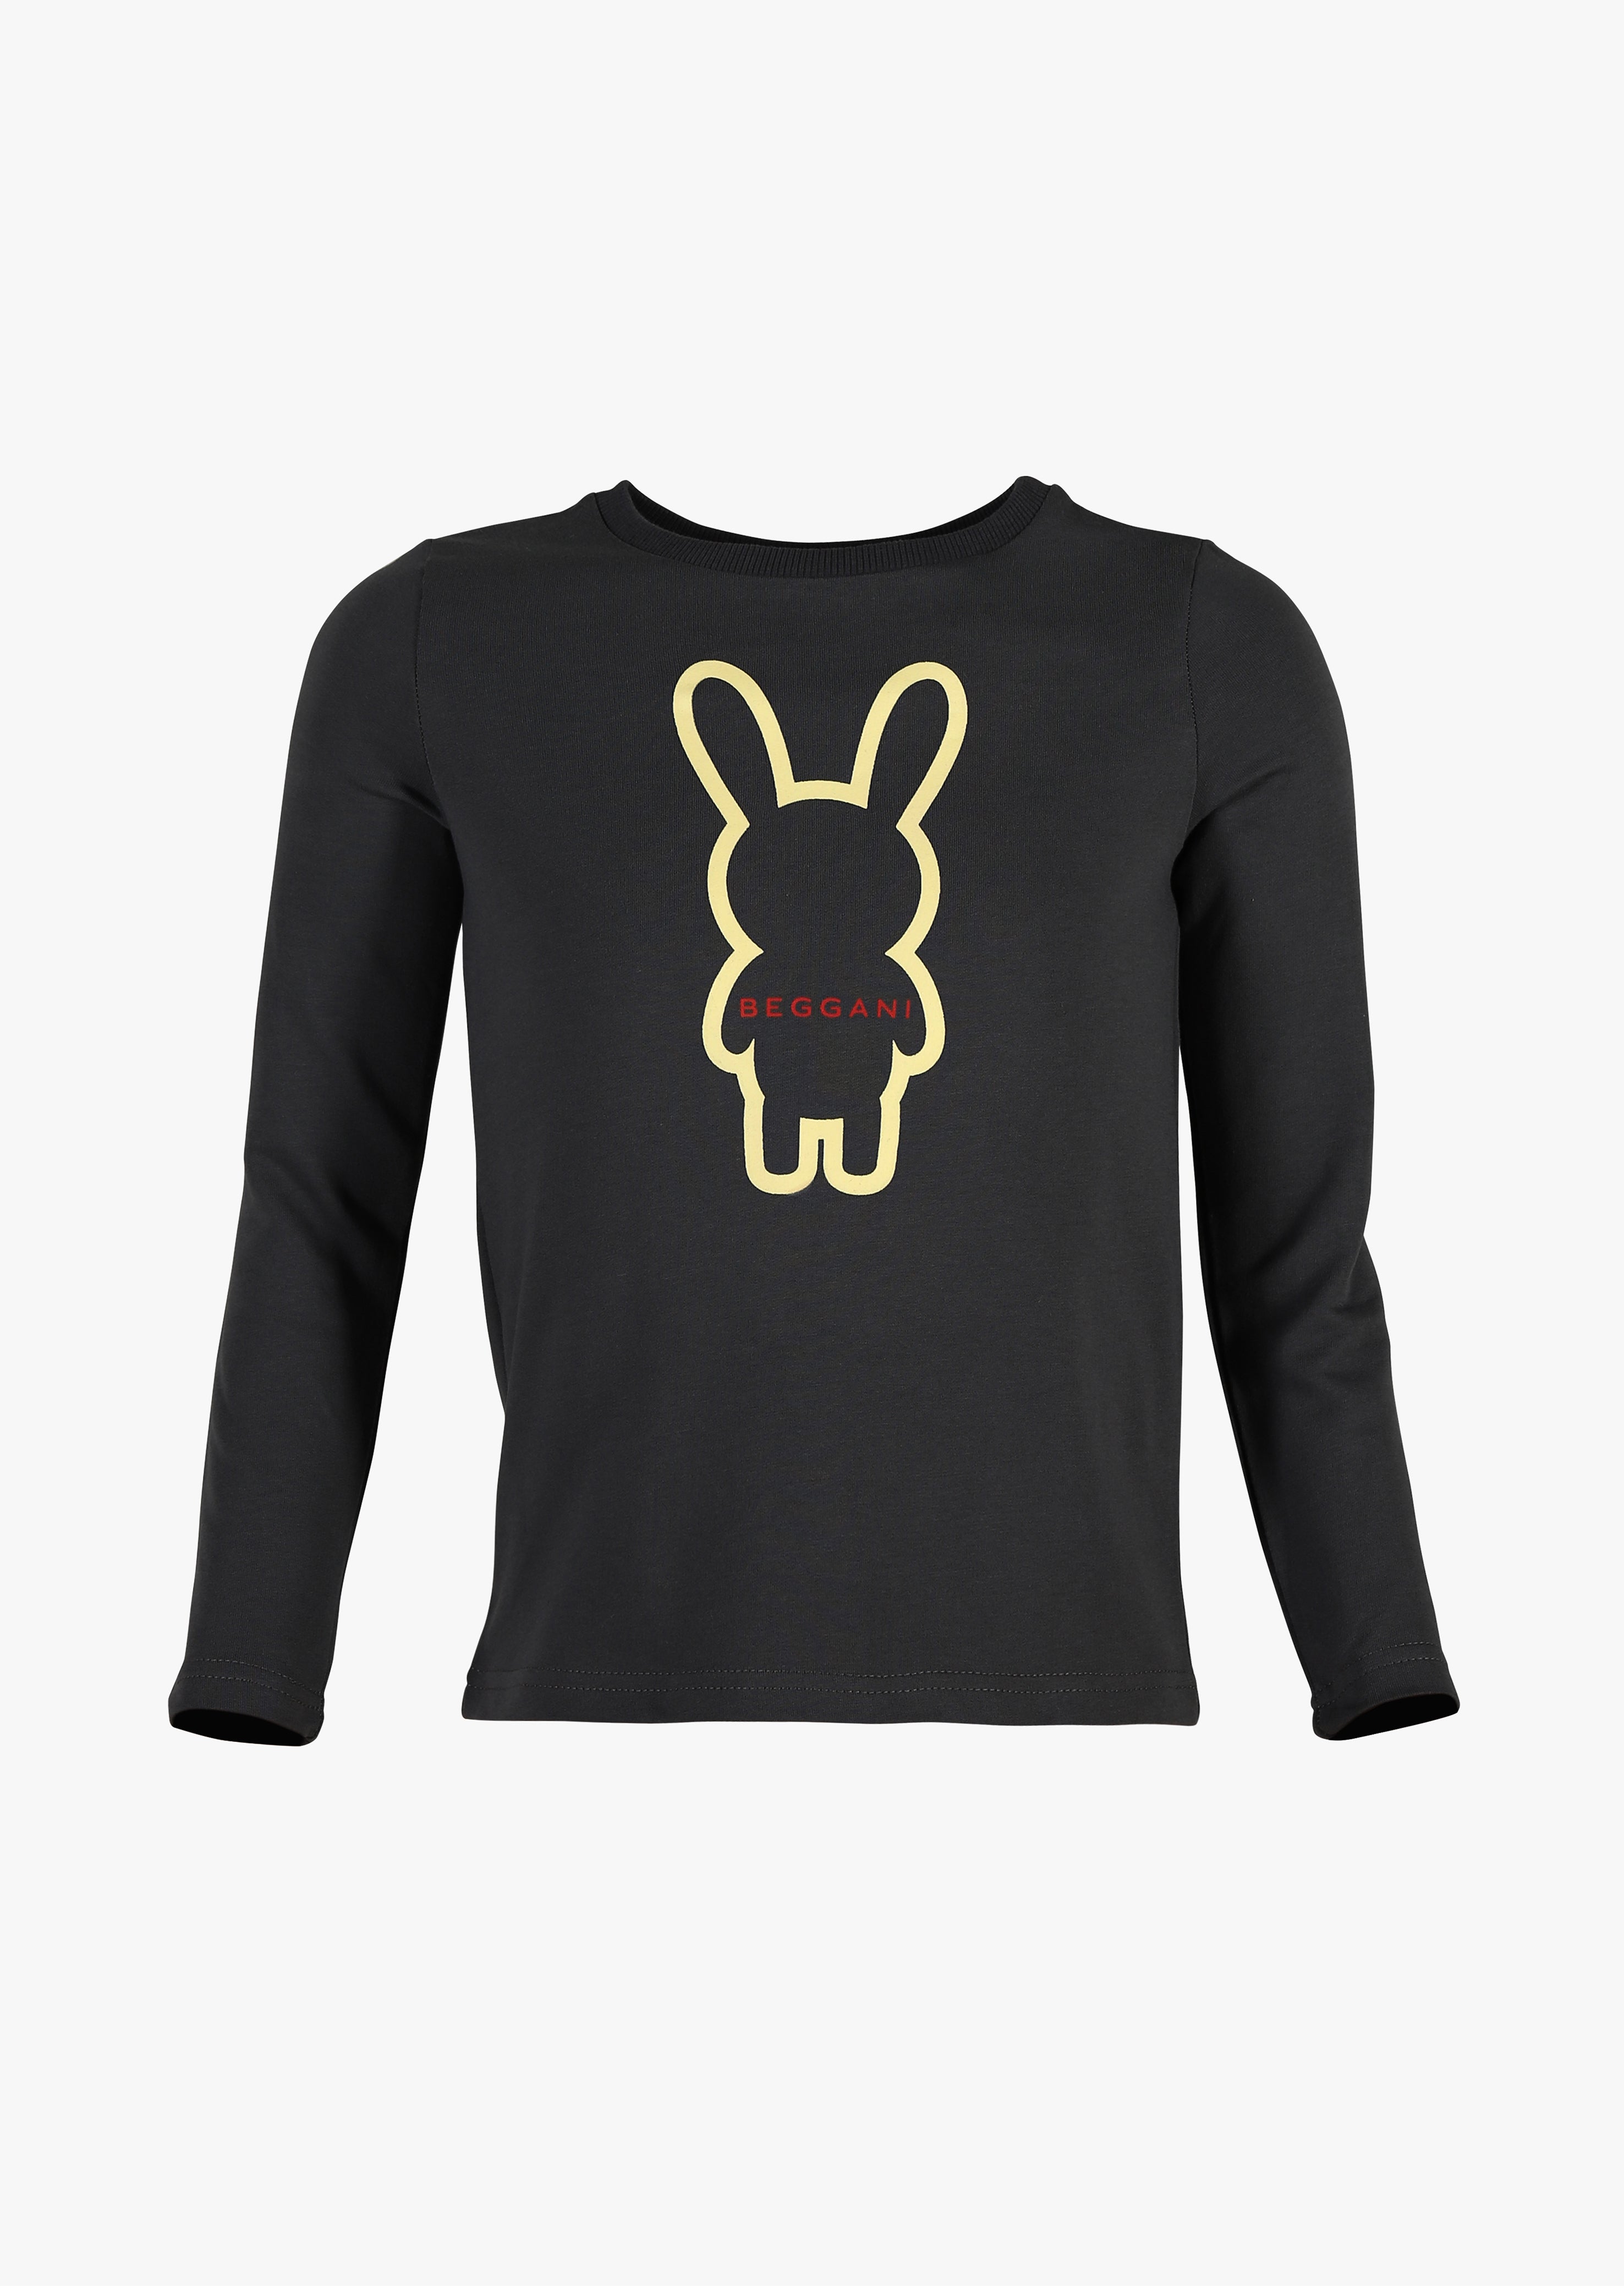 Long Sleeve T-Shirt BEGGANI Rabbit